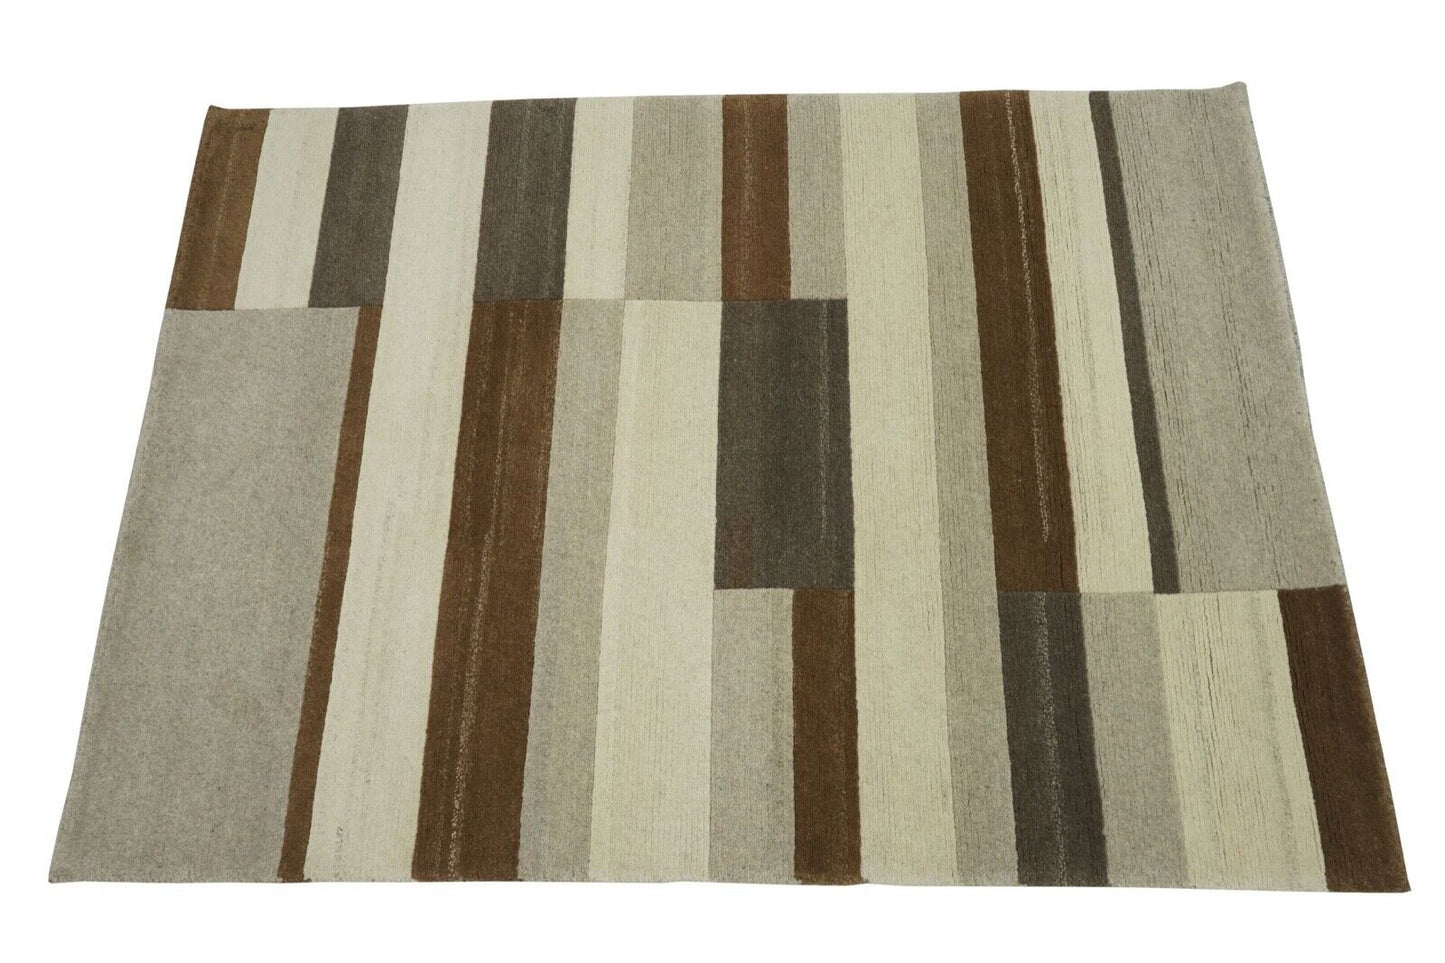 Nepal Teppich Handgeknüpft 100% Wolle Braun Beige Grau 140X200 cm N769